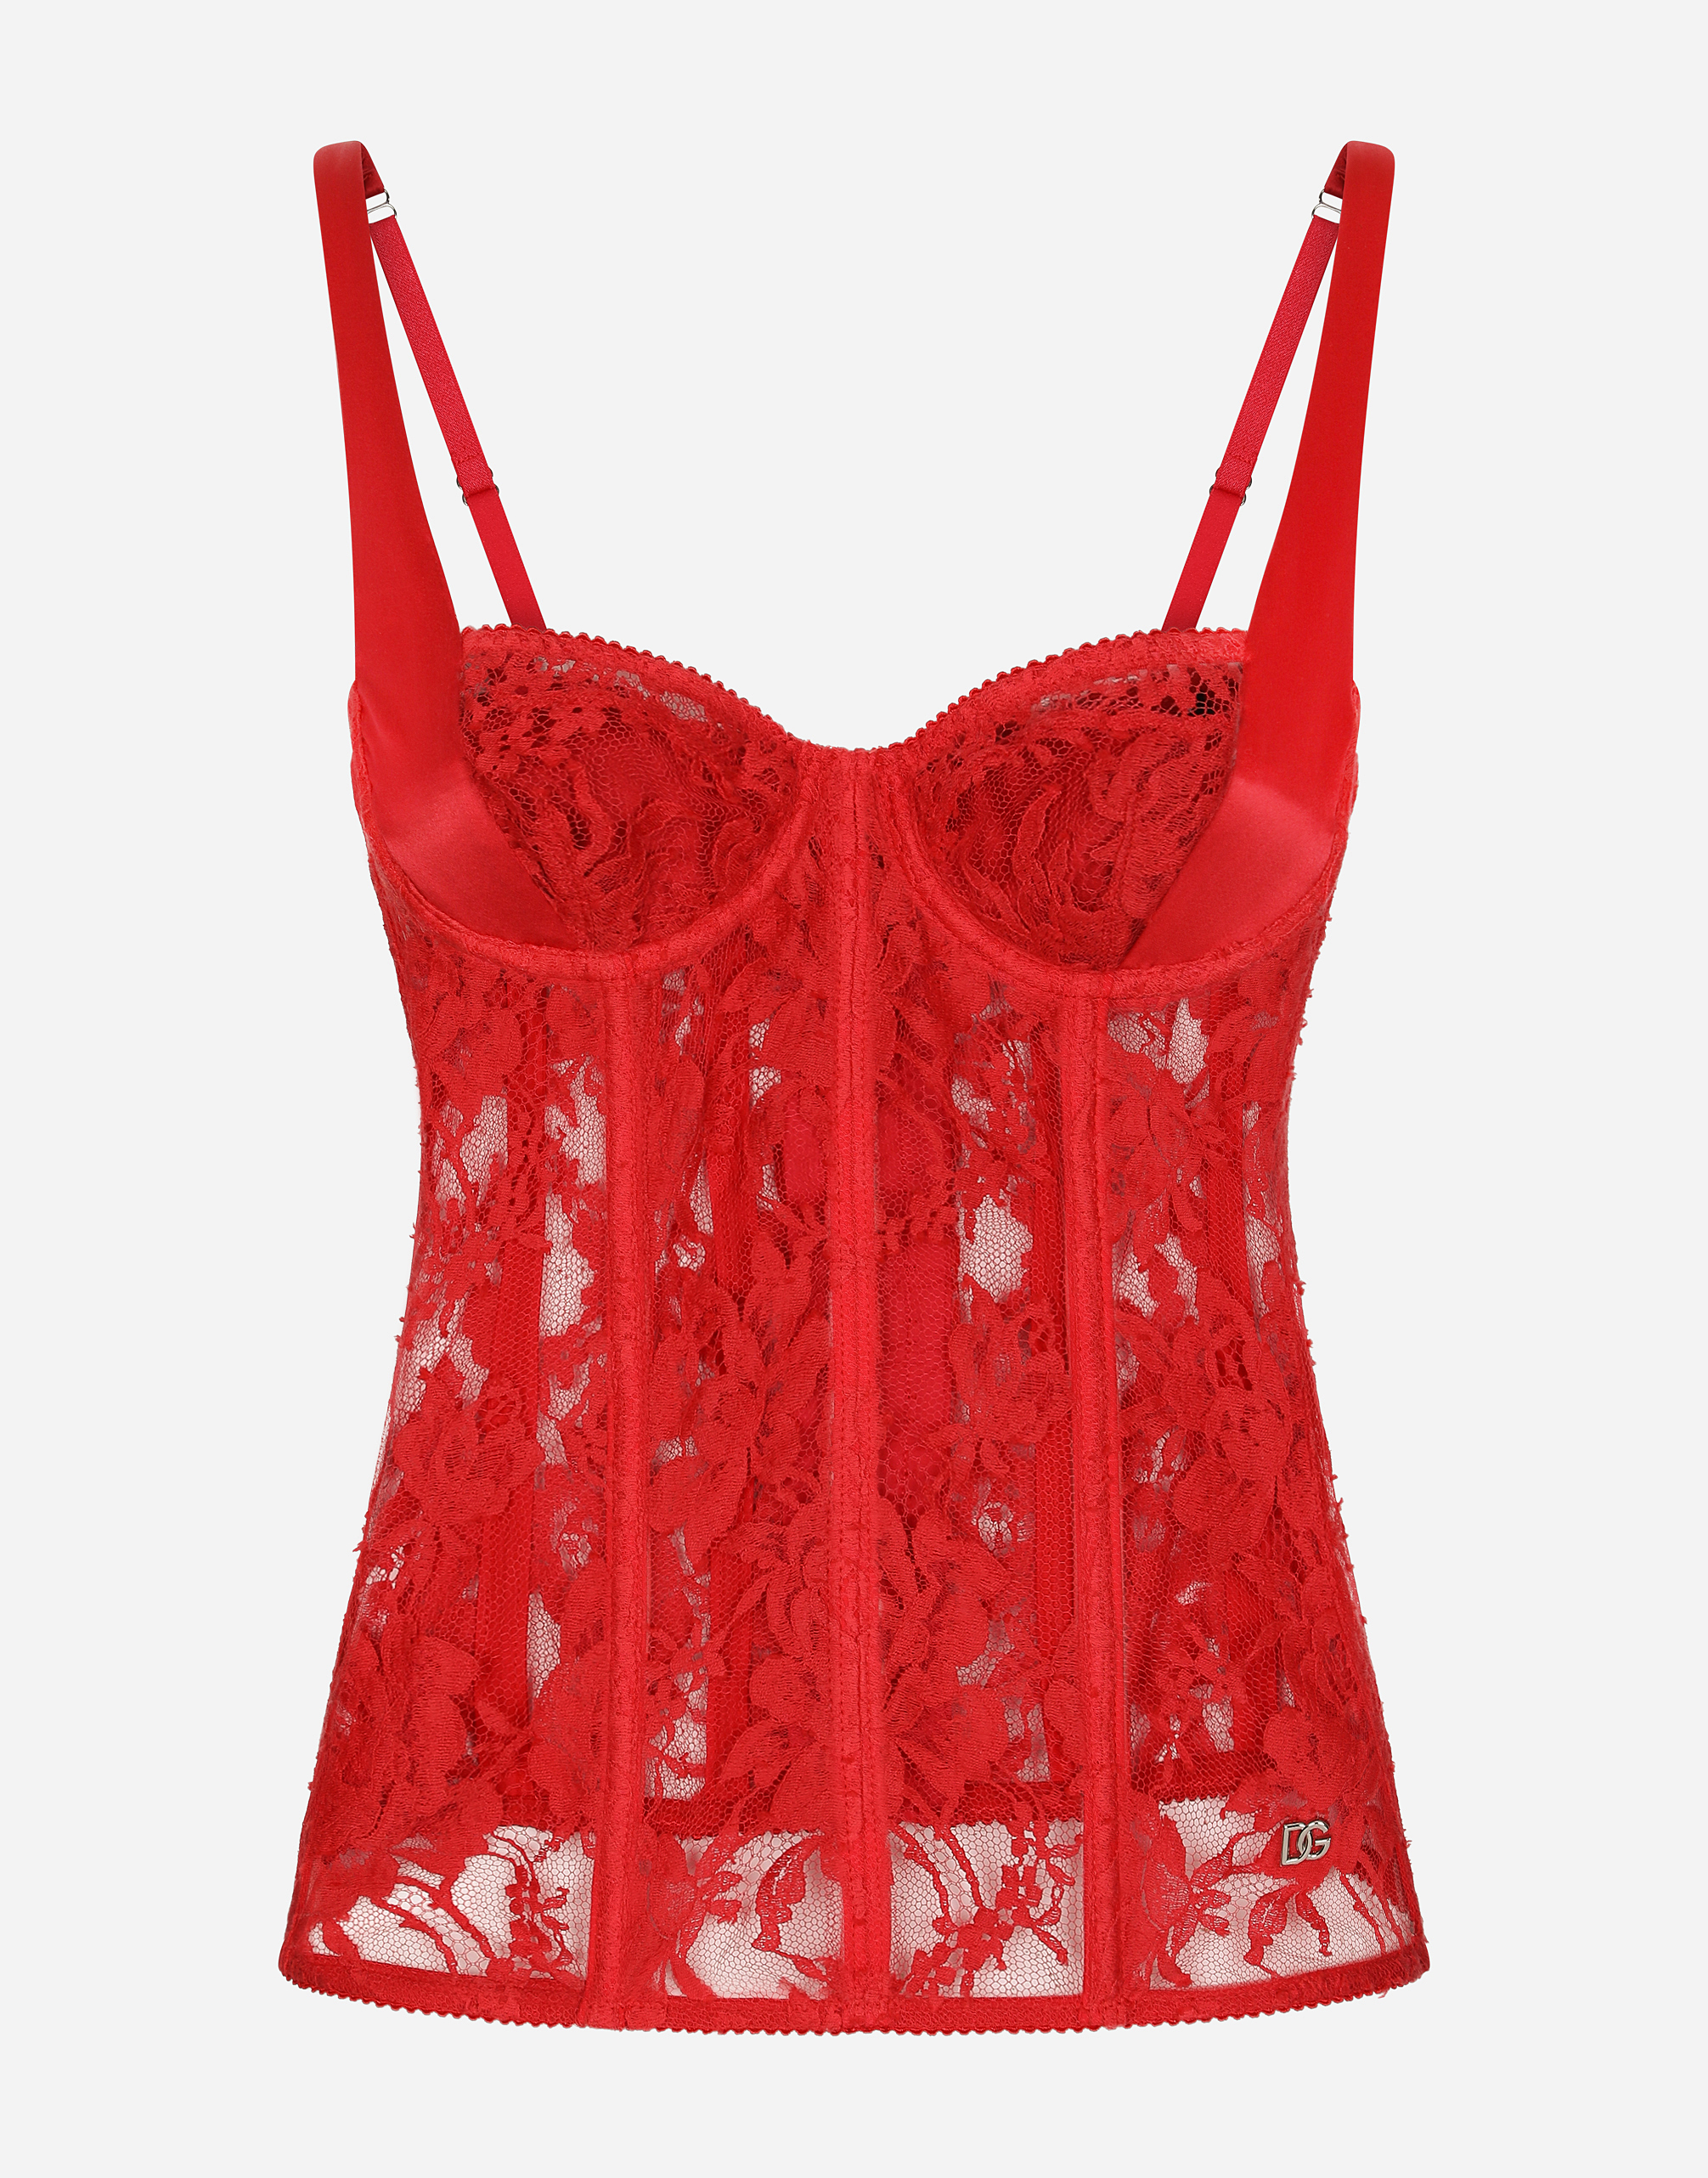 Dolce & Gabbana Lace Underwear Corset In Nail_red